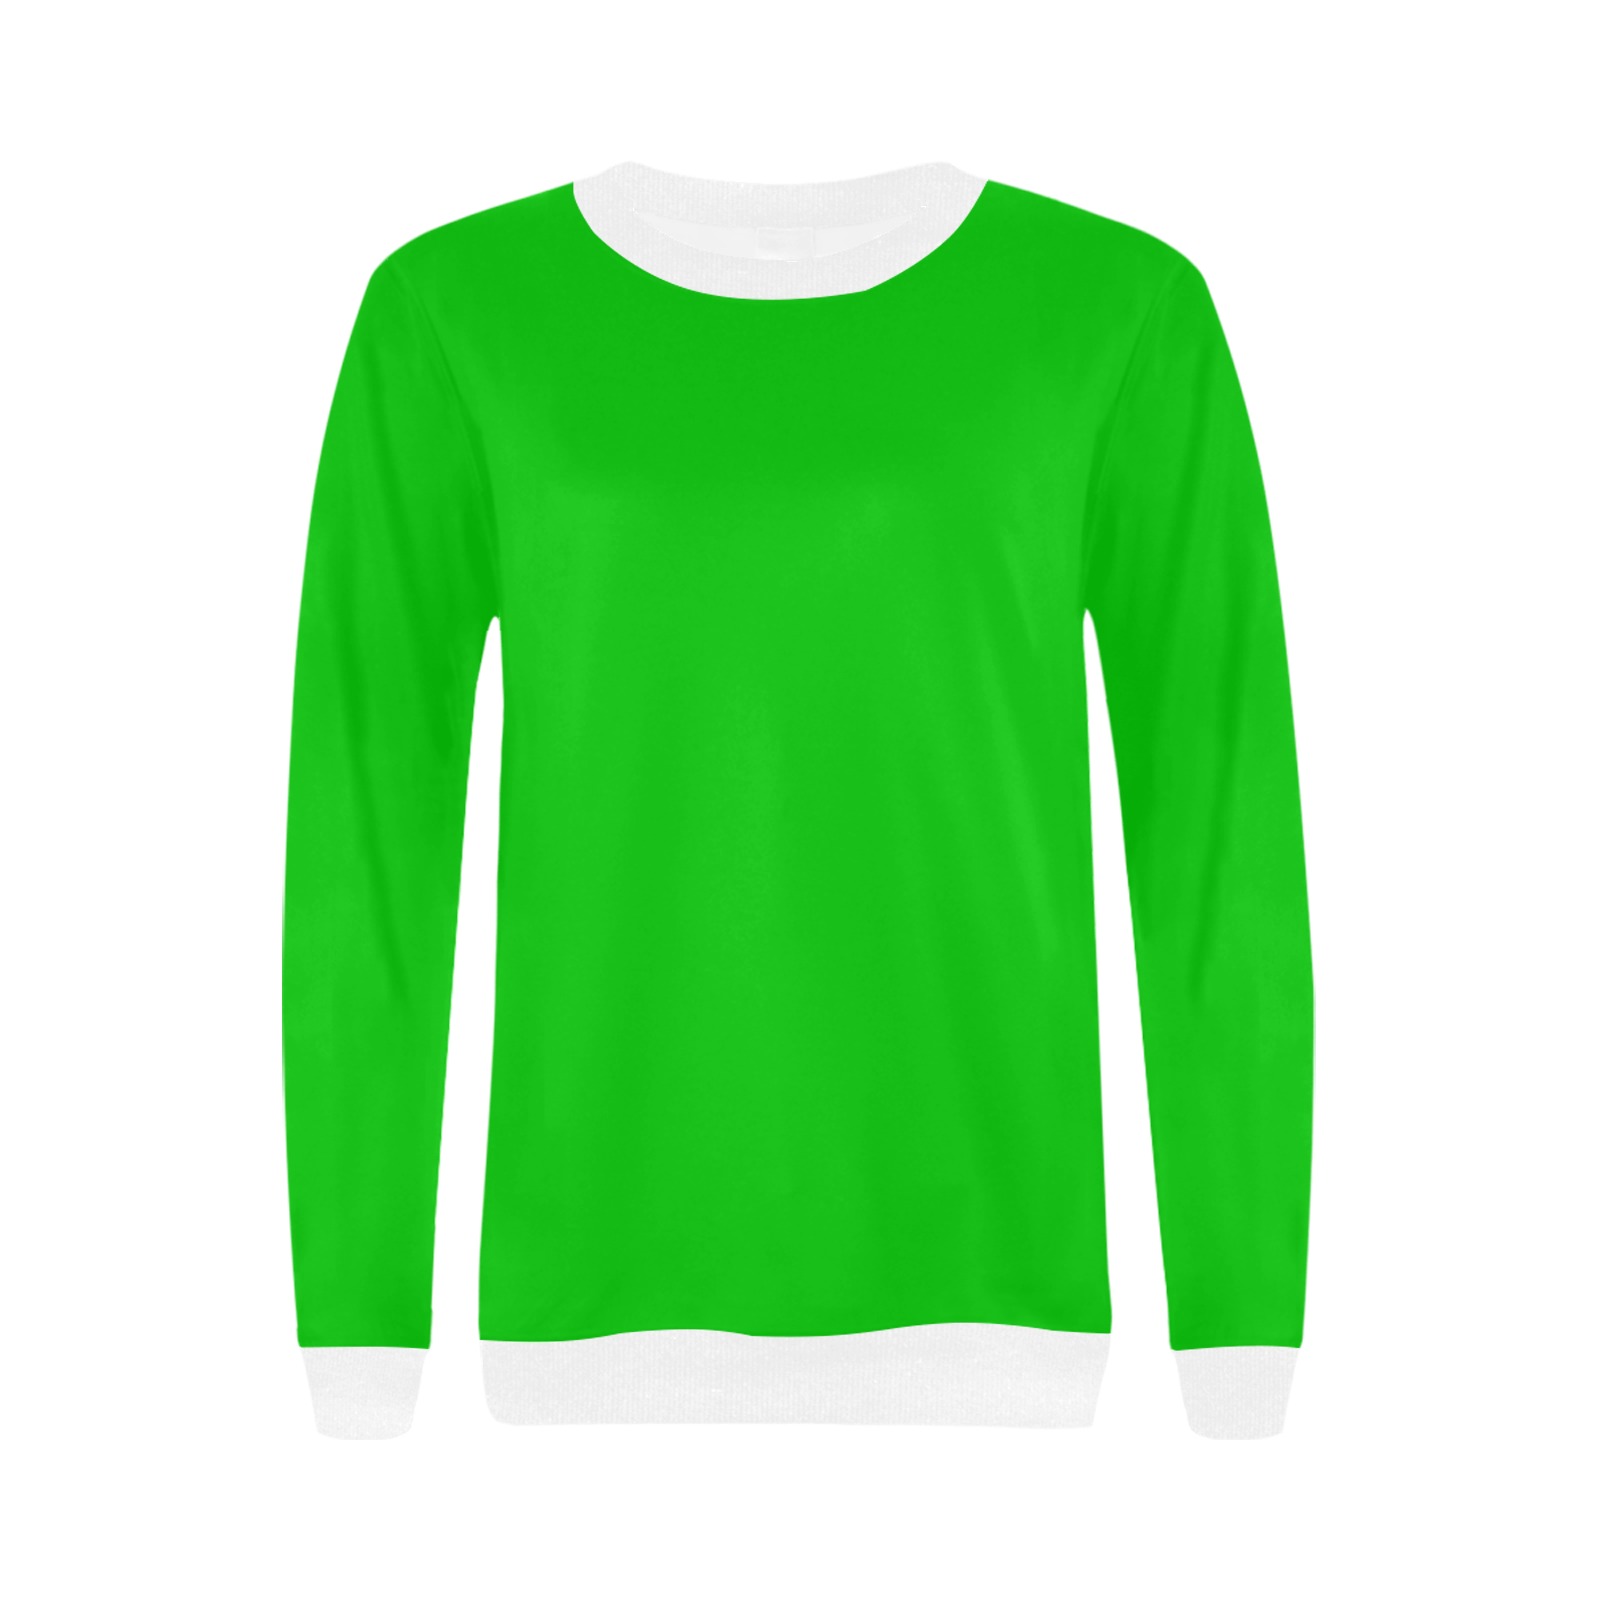 Merry Christmas Green Solid Color Women's Rib Cuff Crew Neck Sweatshirt (Model H34)